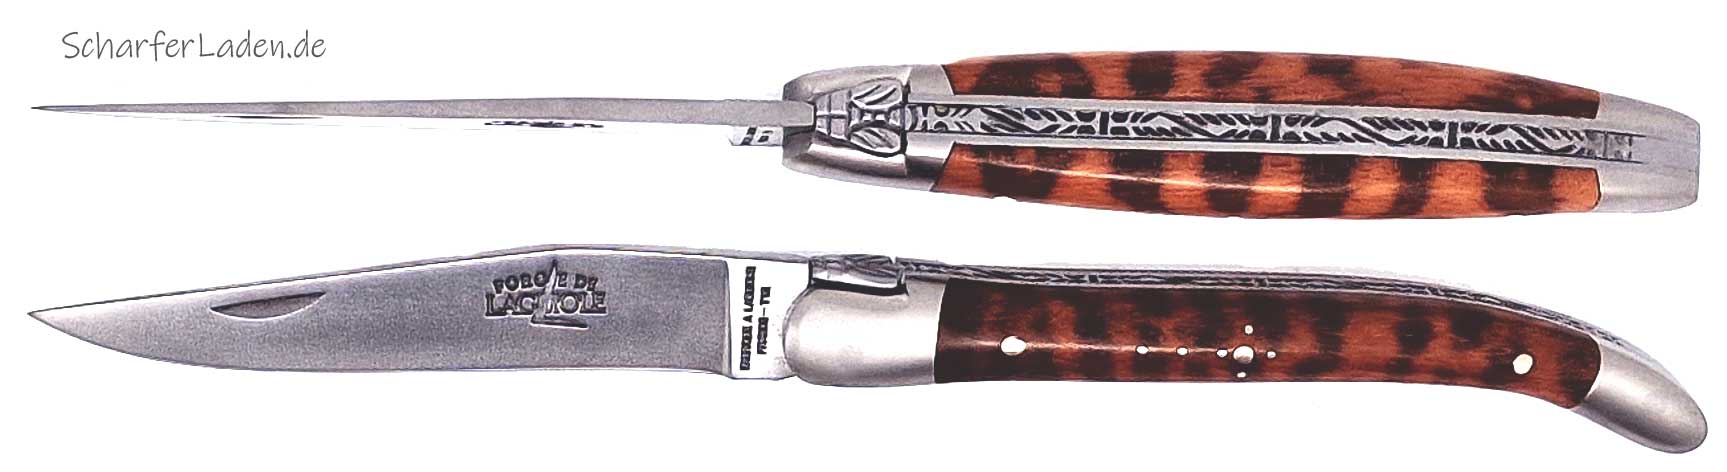 9 cm FORGE DE LAGUIOLE TRADITION poket knife snakewood